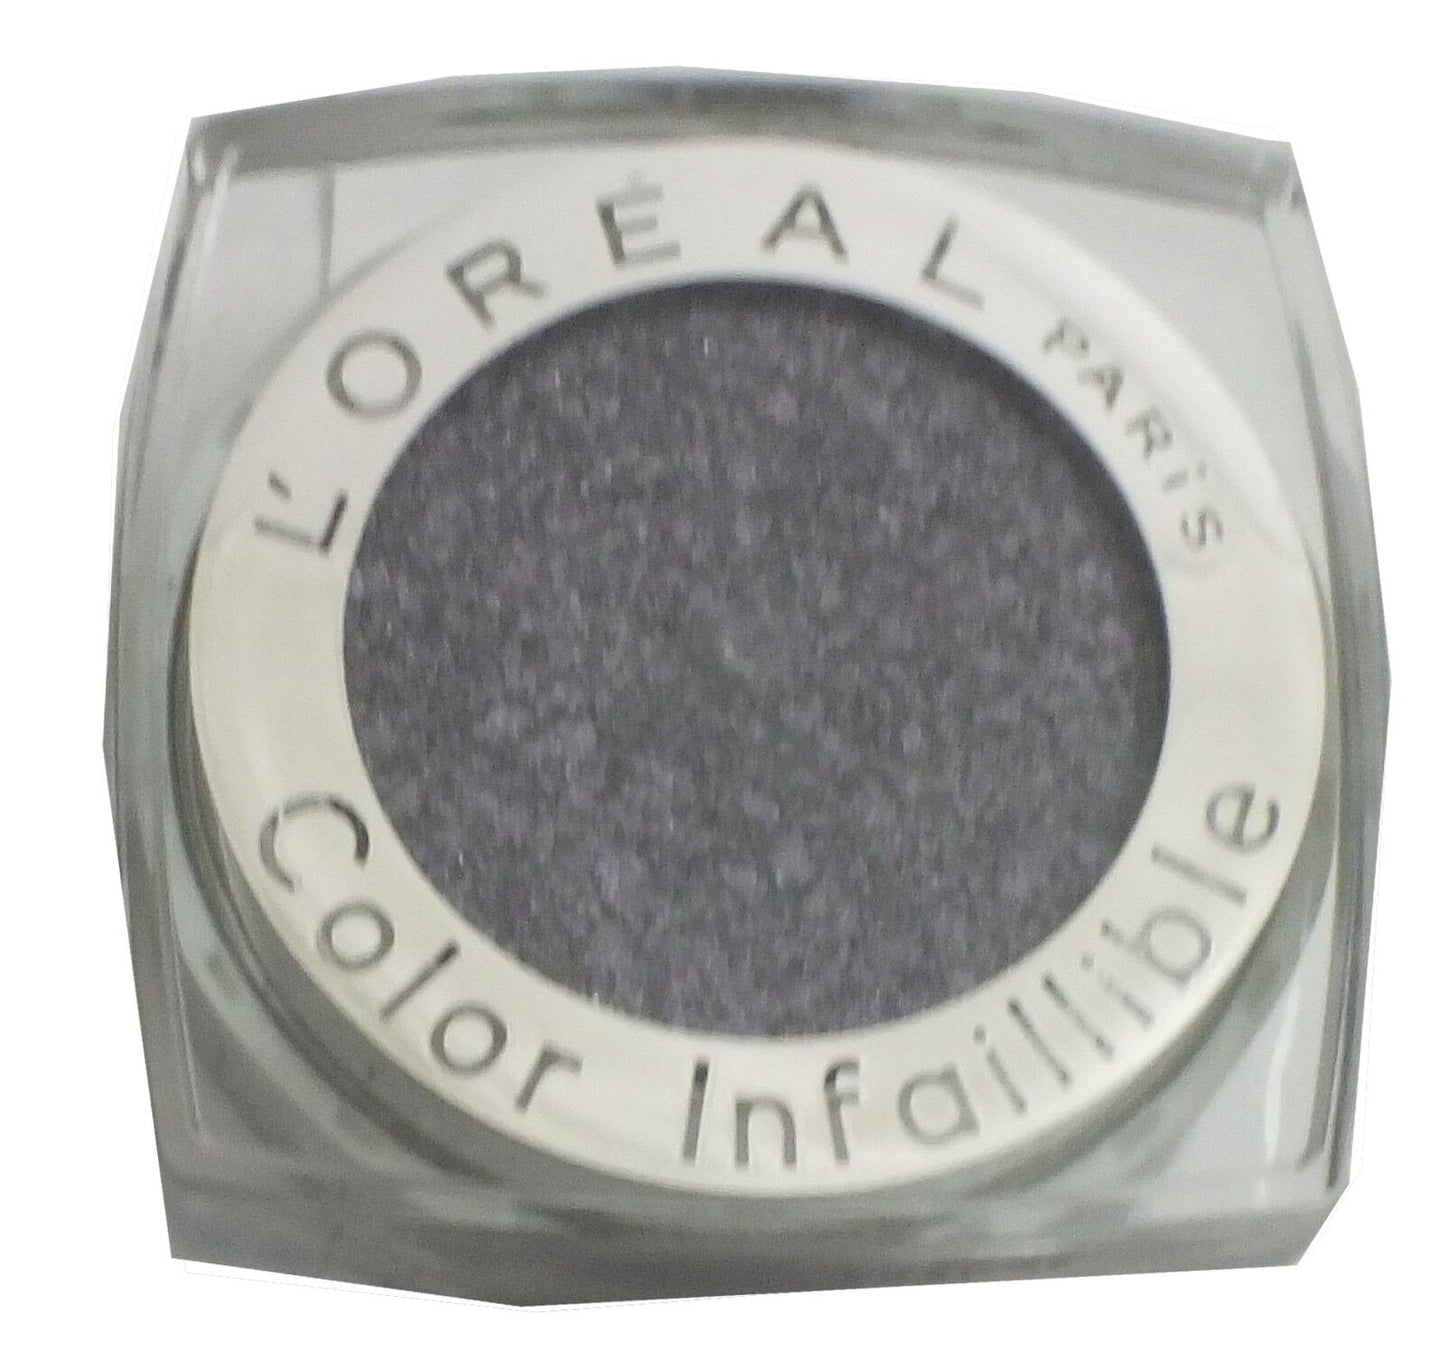 L'Oreal Color Infallible Eyeshadow  (10 Shades)